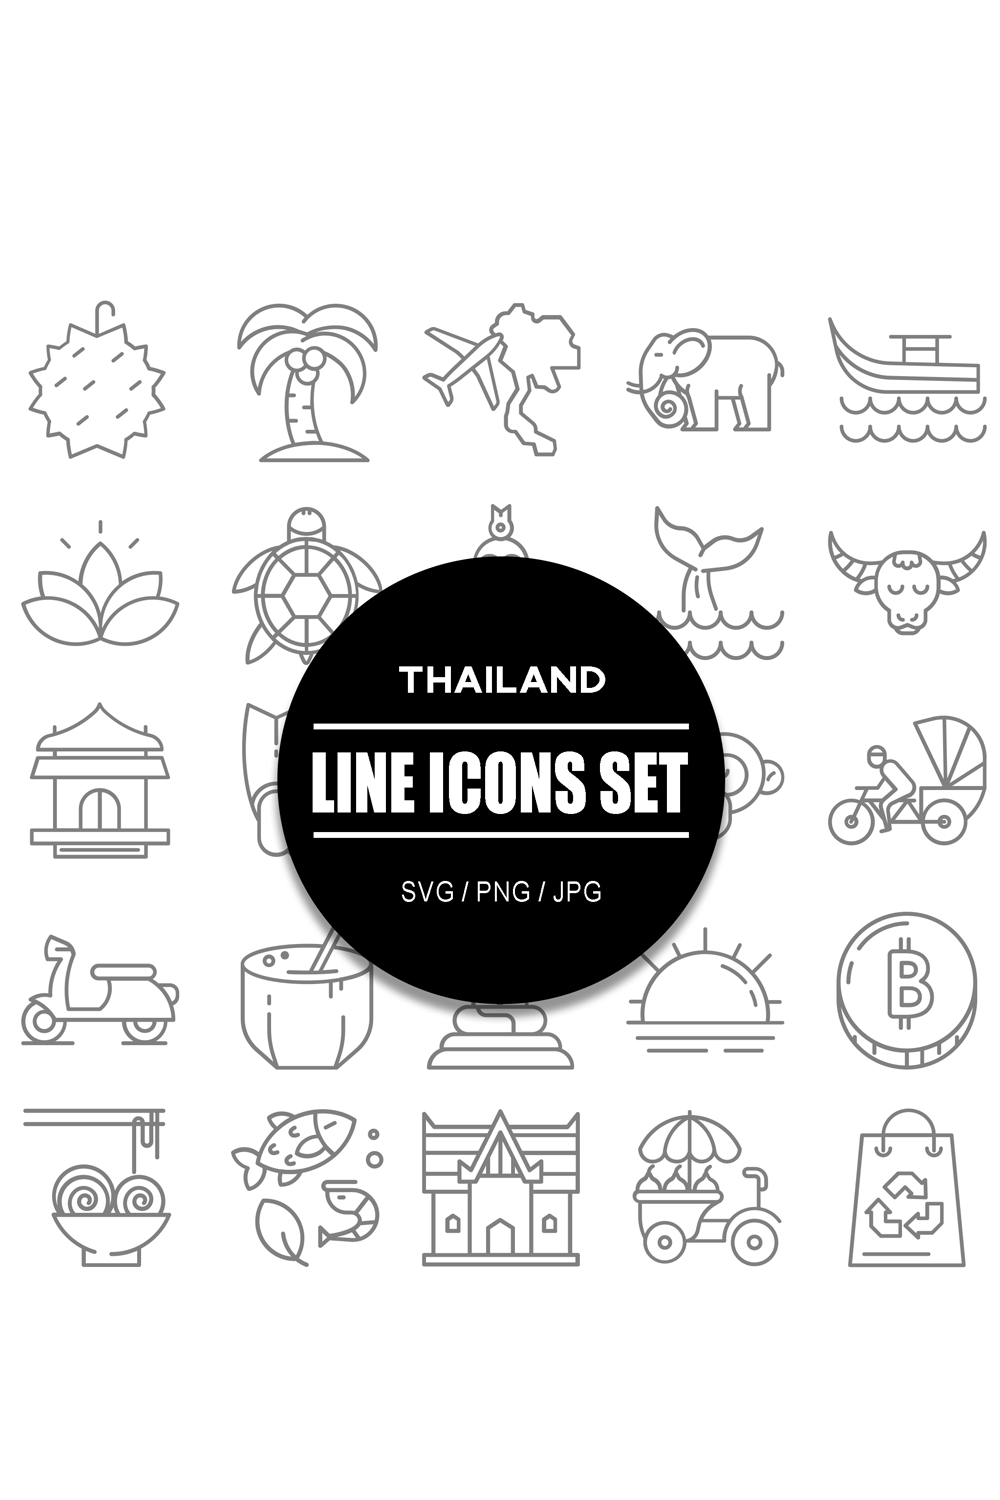 Thailand Line Icon Set pinterest preview image.